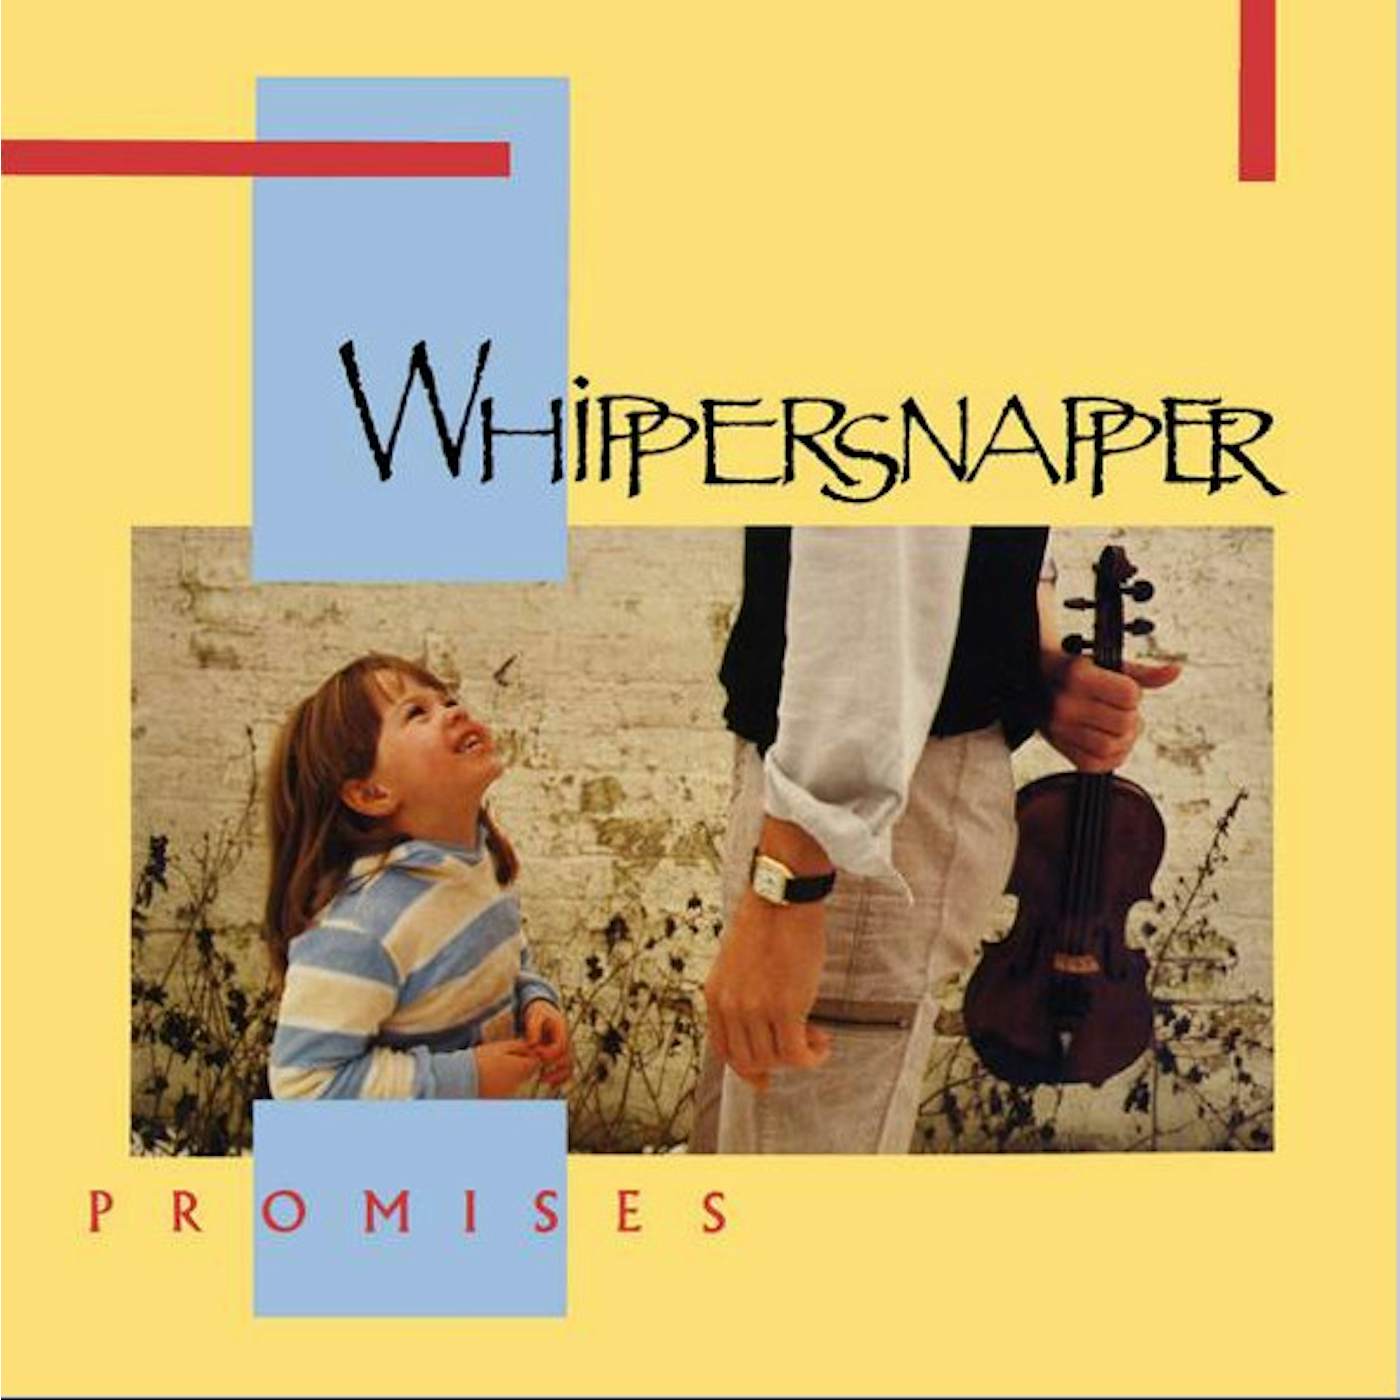 Whippersnapper Promises Vinyl Record